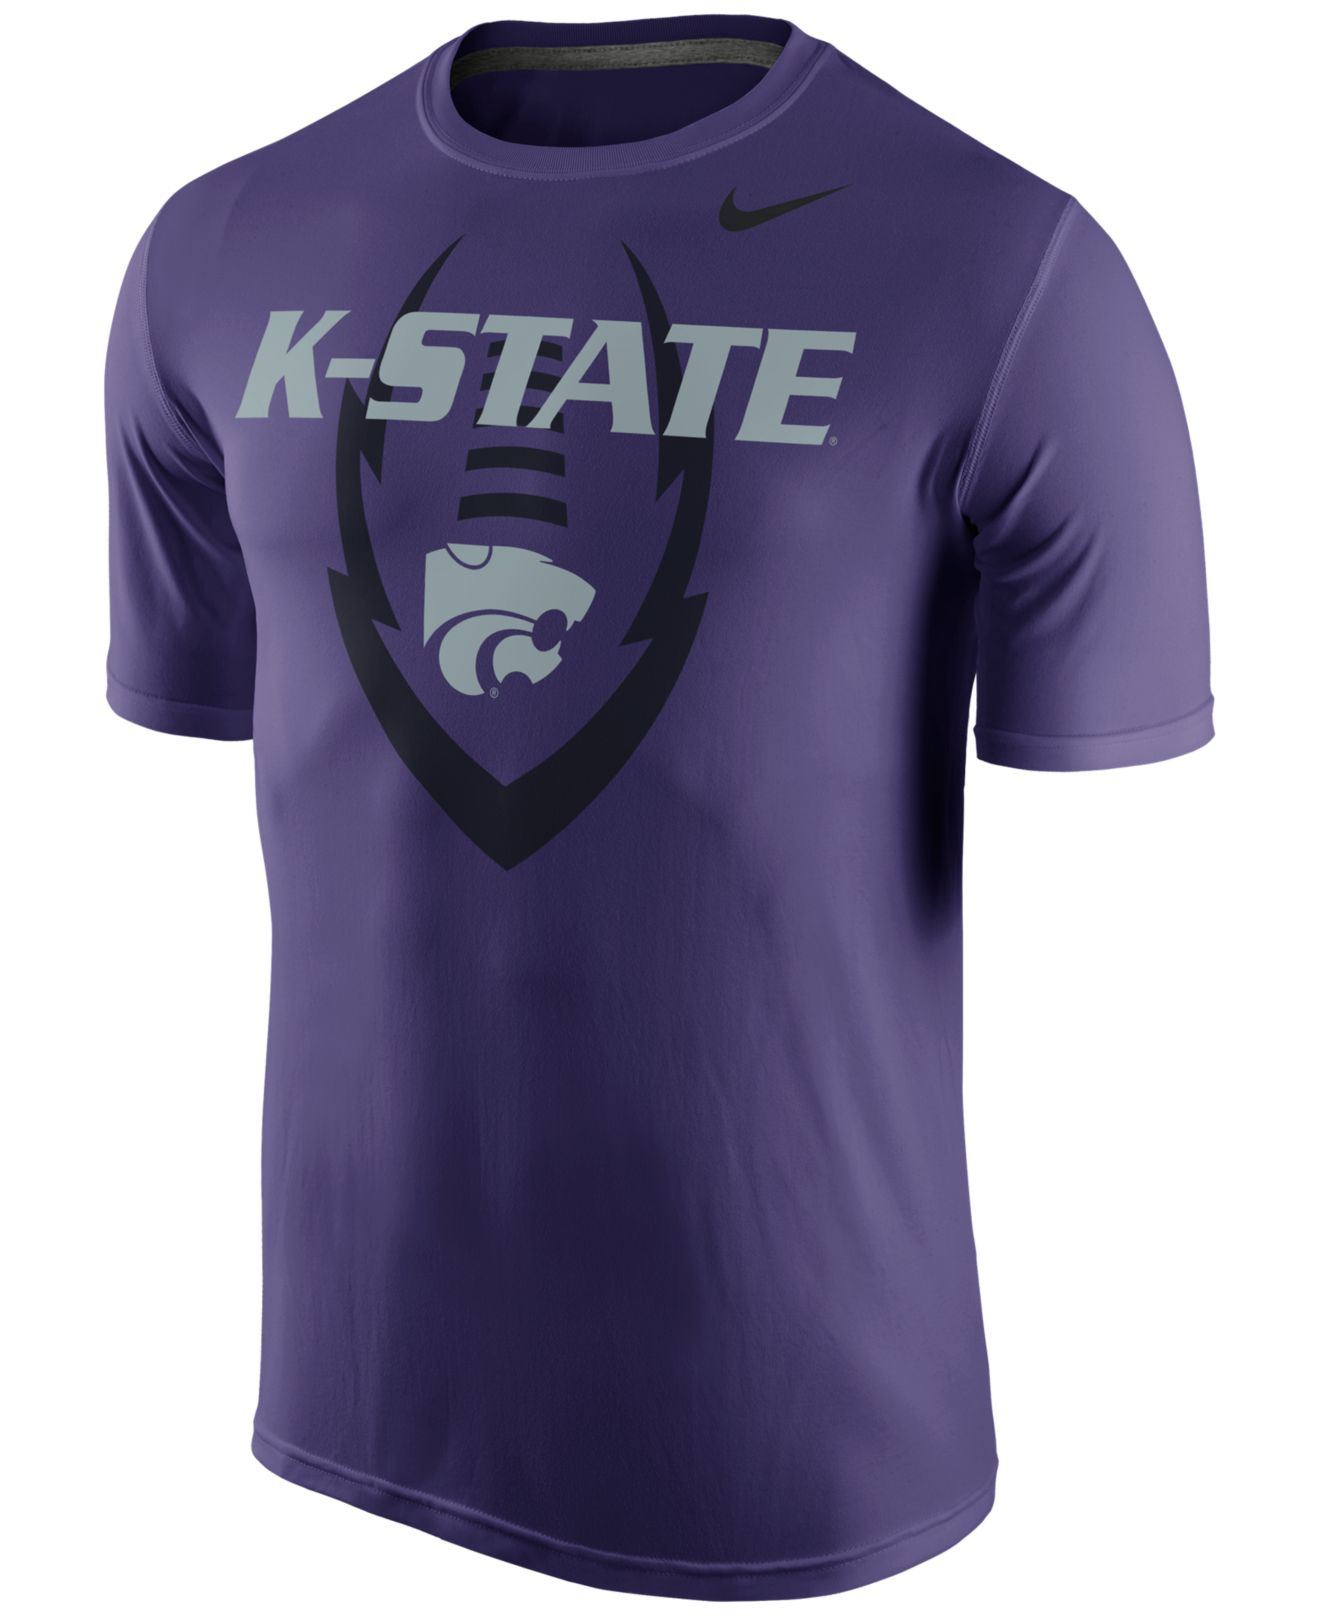 Lyst - Nike Men's Kansas State Wildcats Legend Icon T-shirt in Purple ...